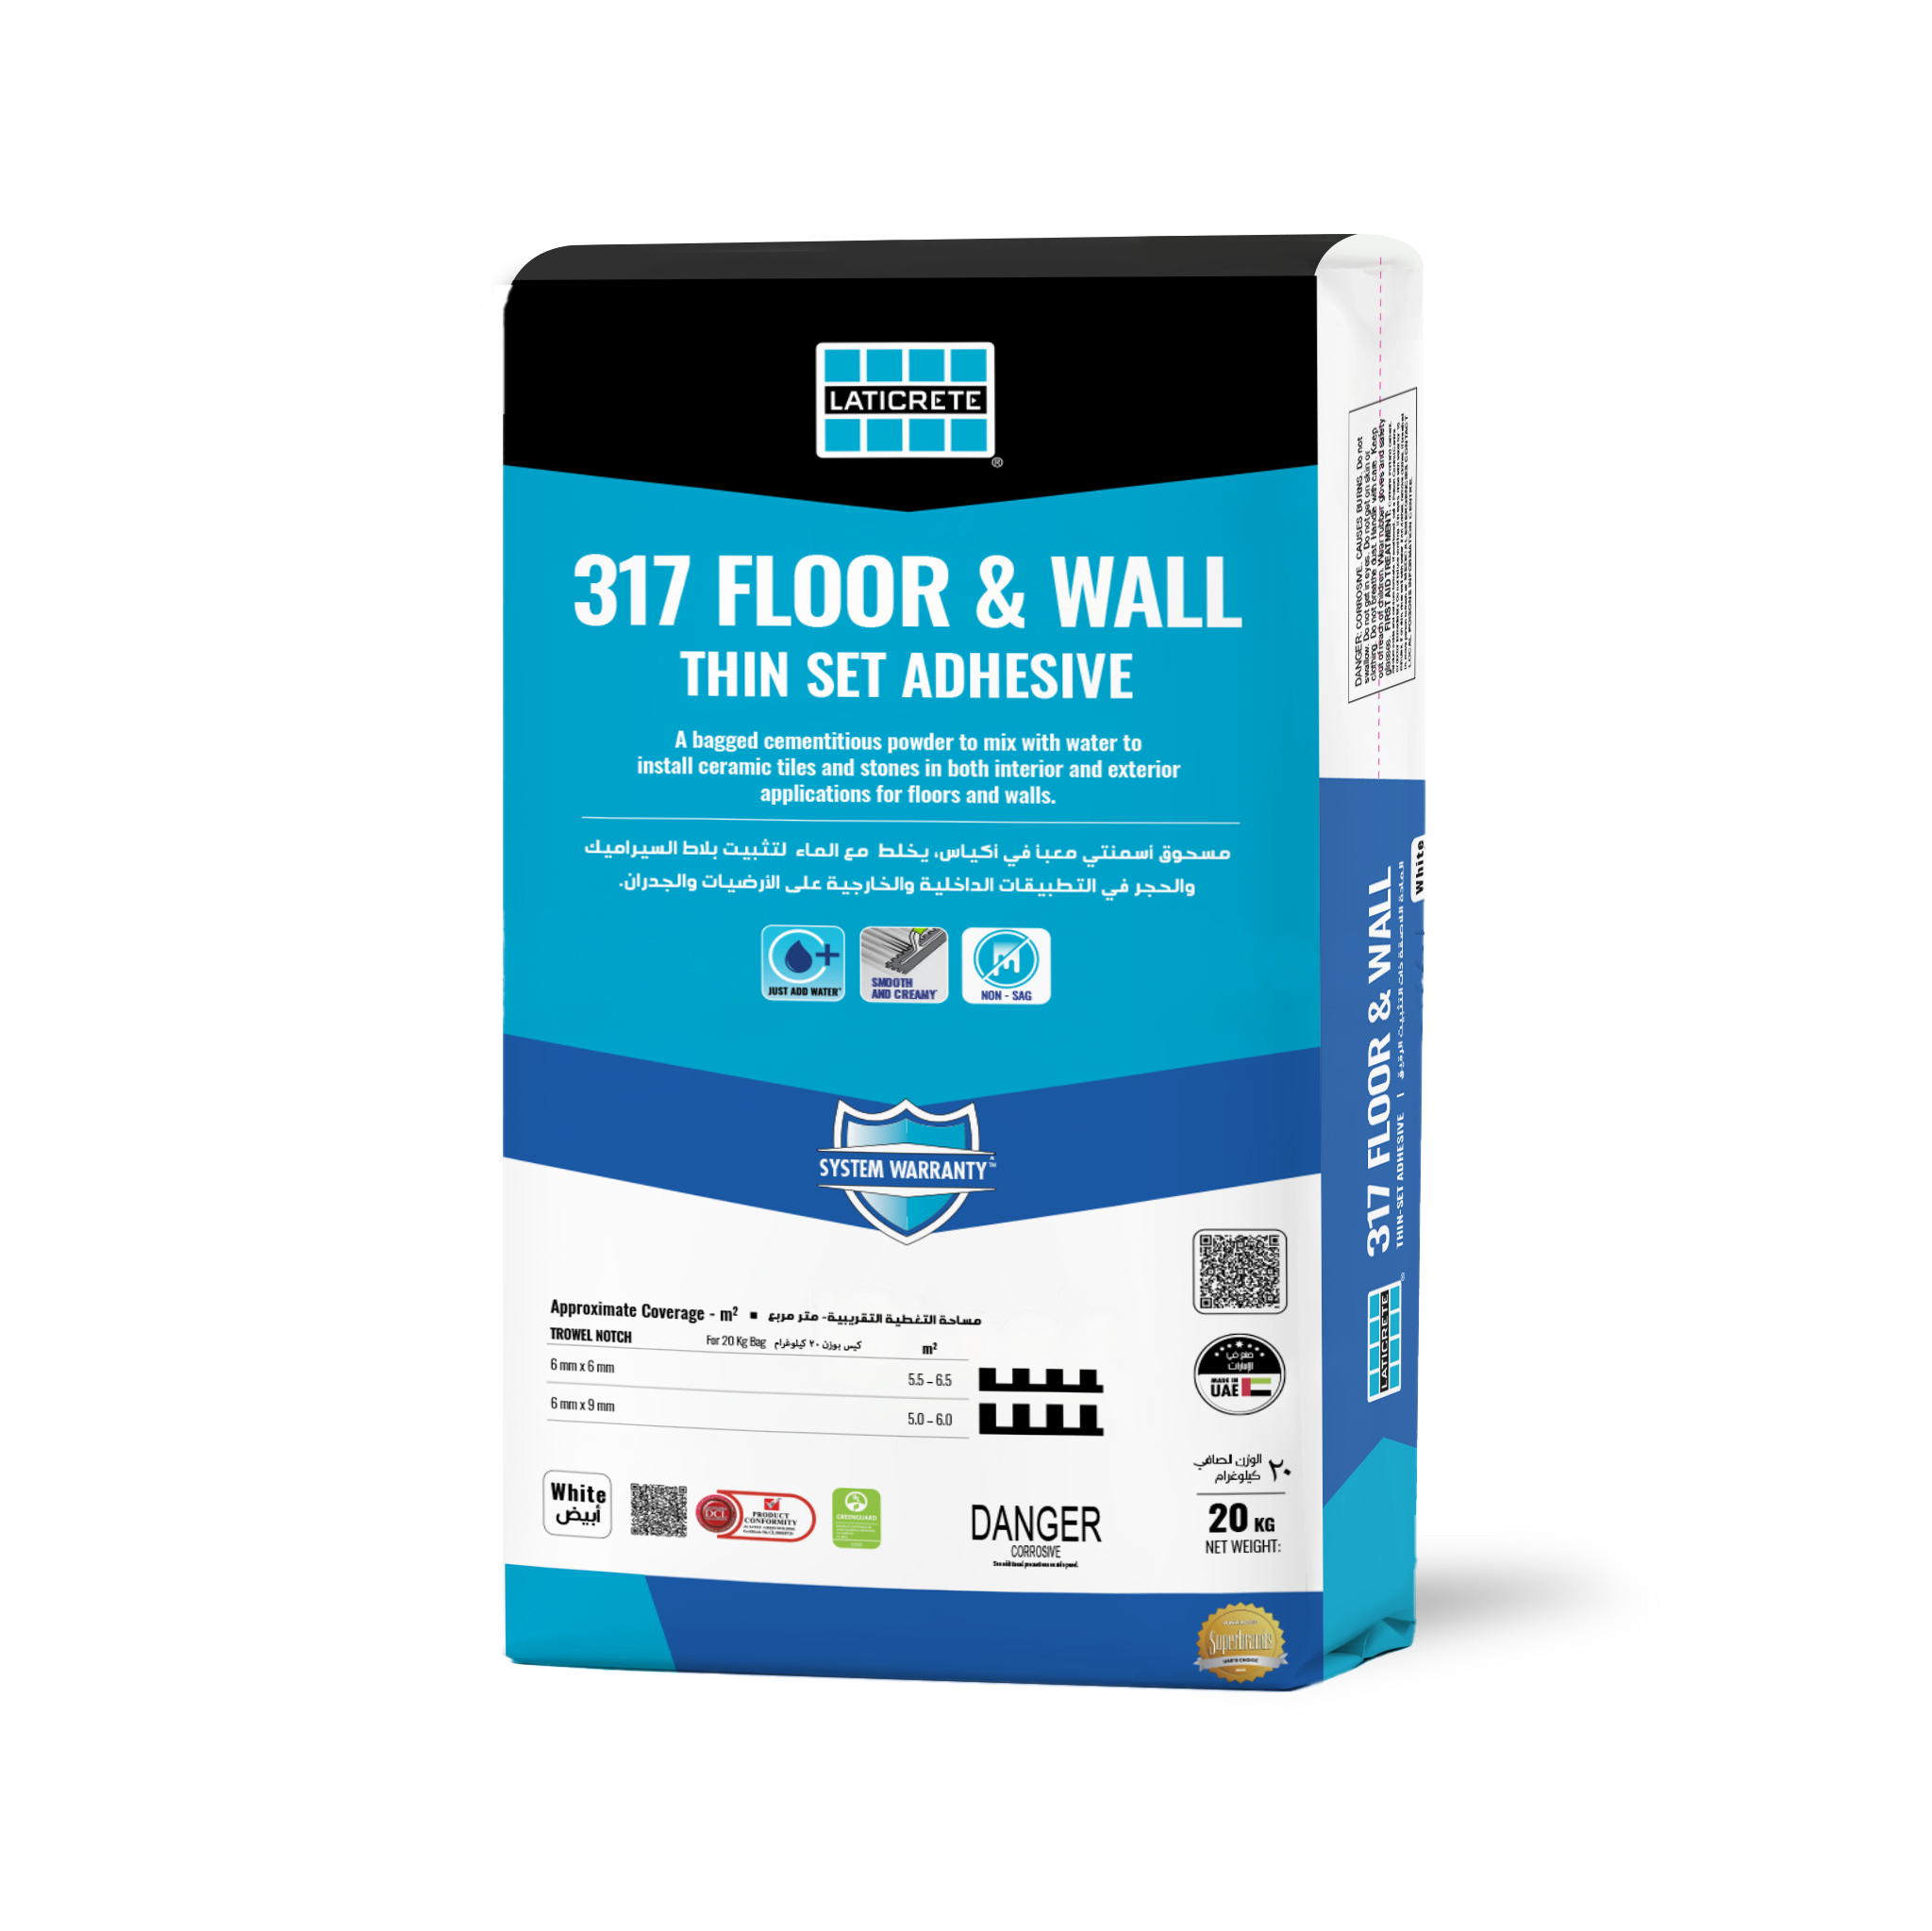 317 Floor & Wall - Thin Set Adhesive